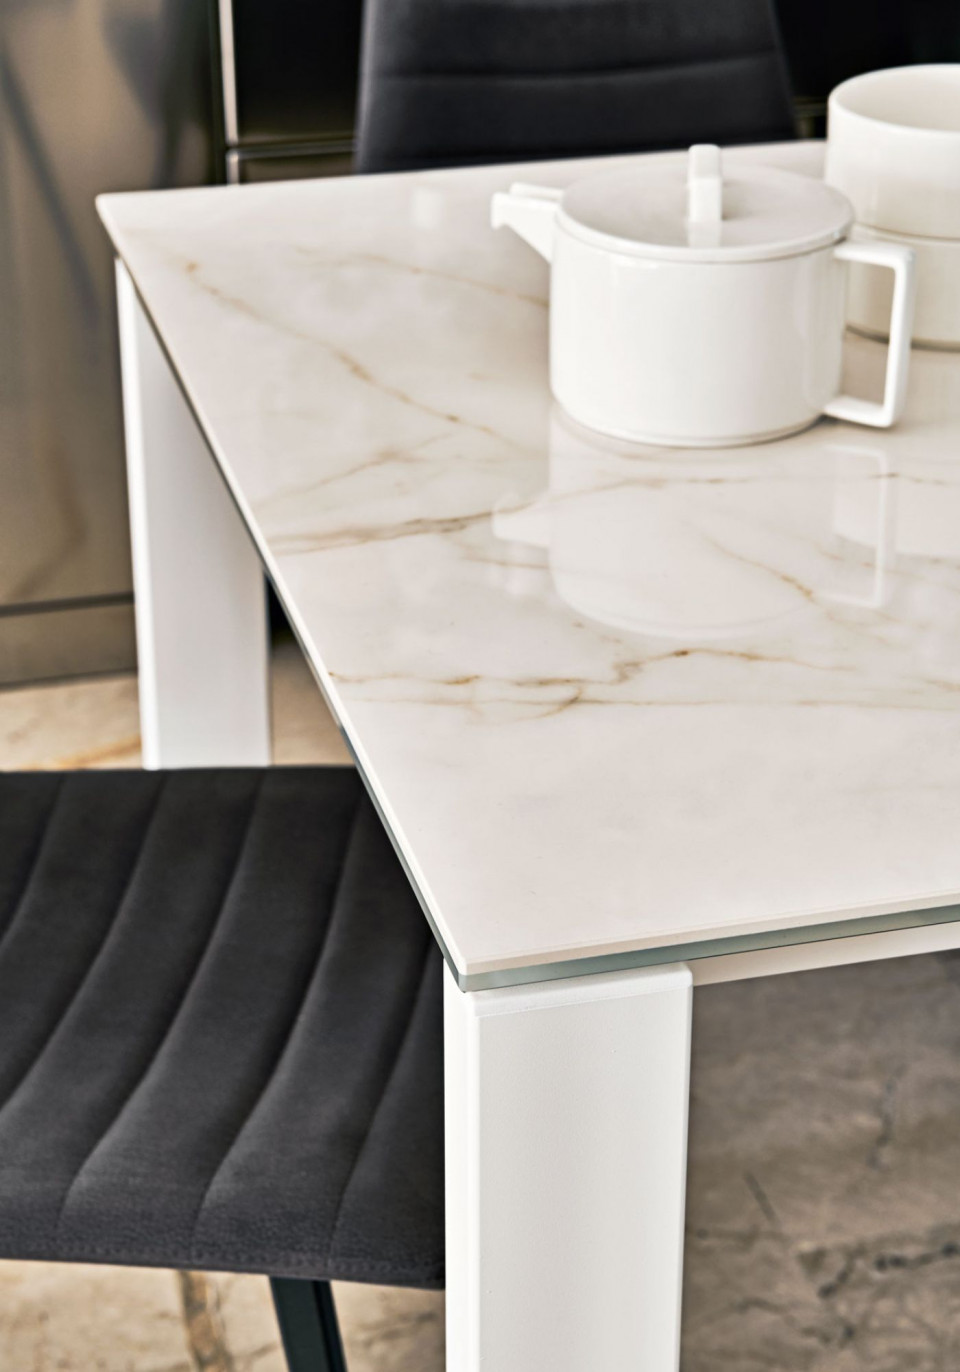 Table de cuisine blanche Badù avec plateau en cristalcéramique marbre Calacatta